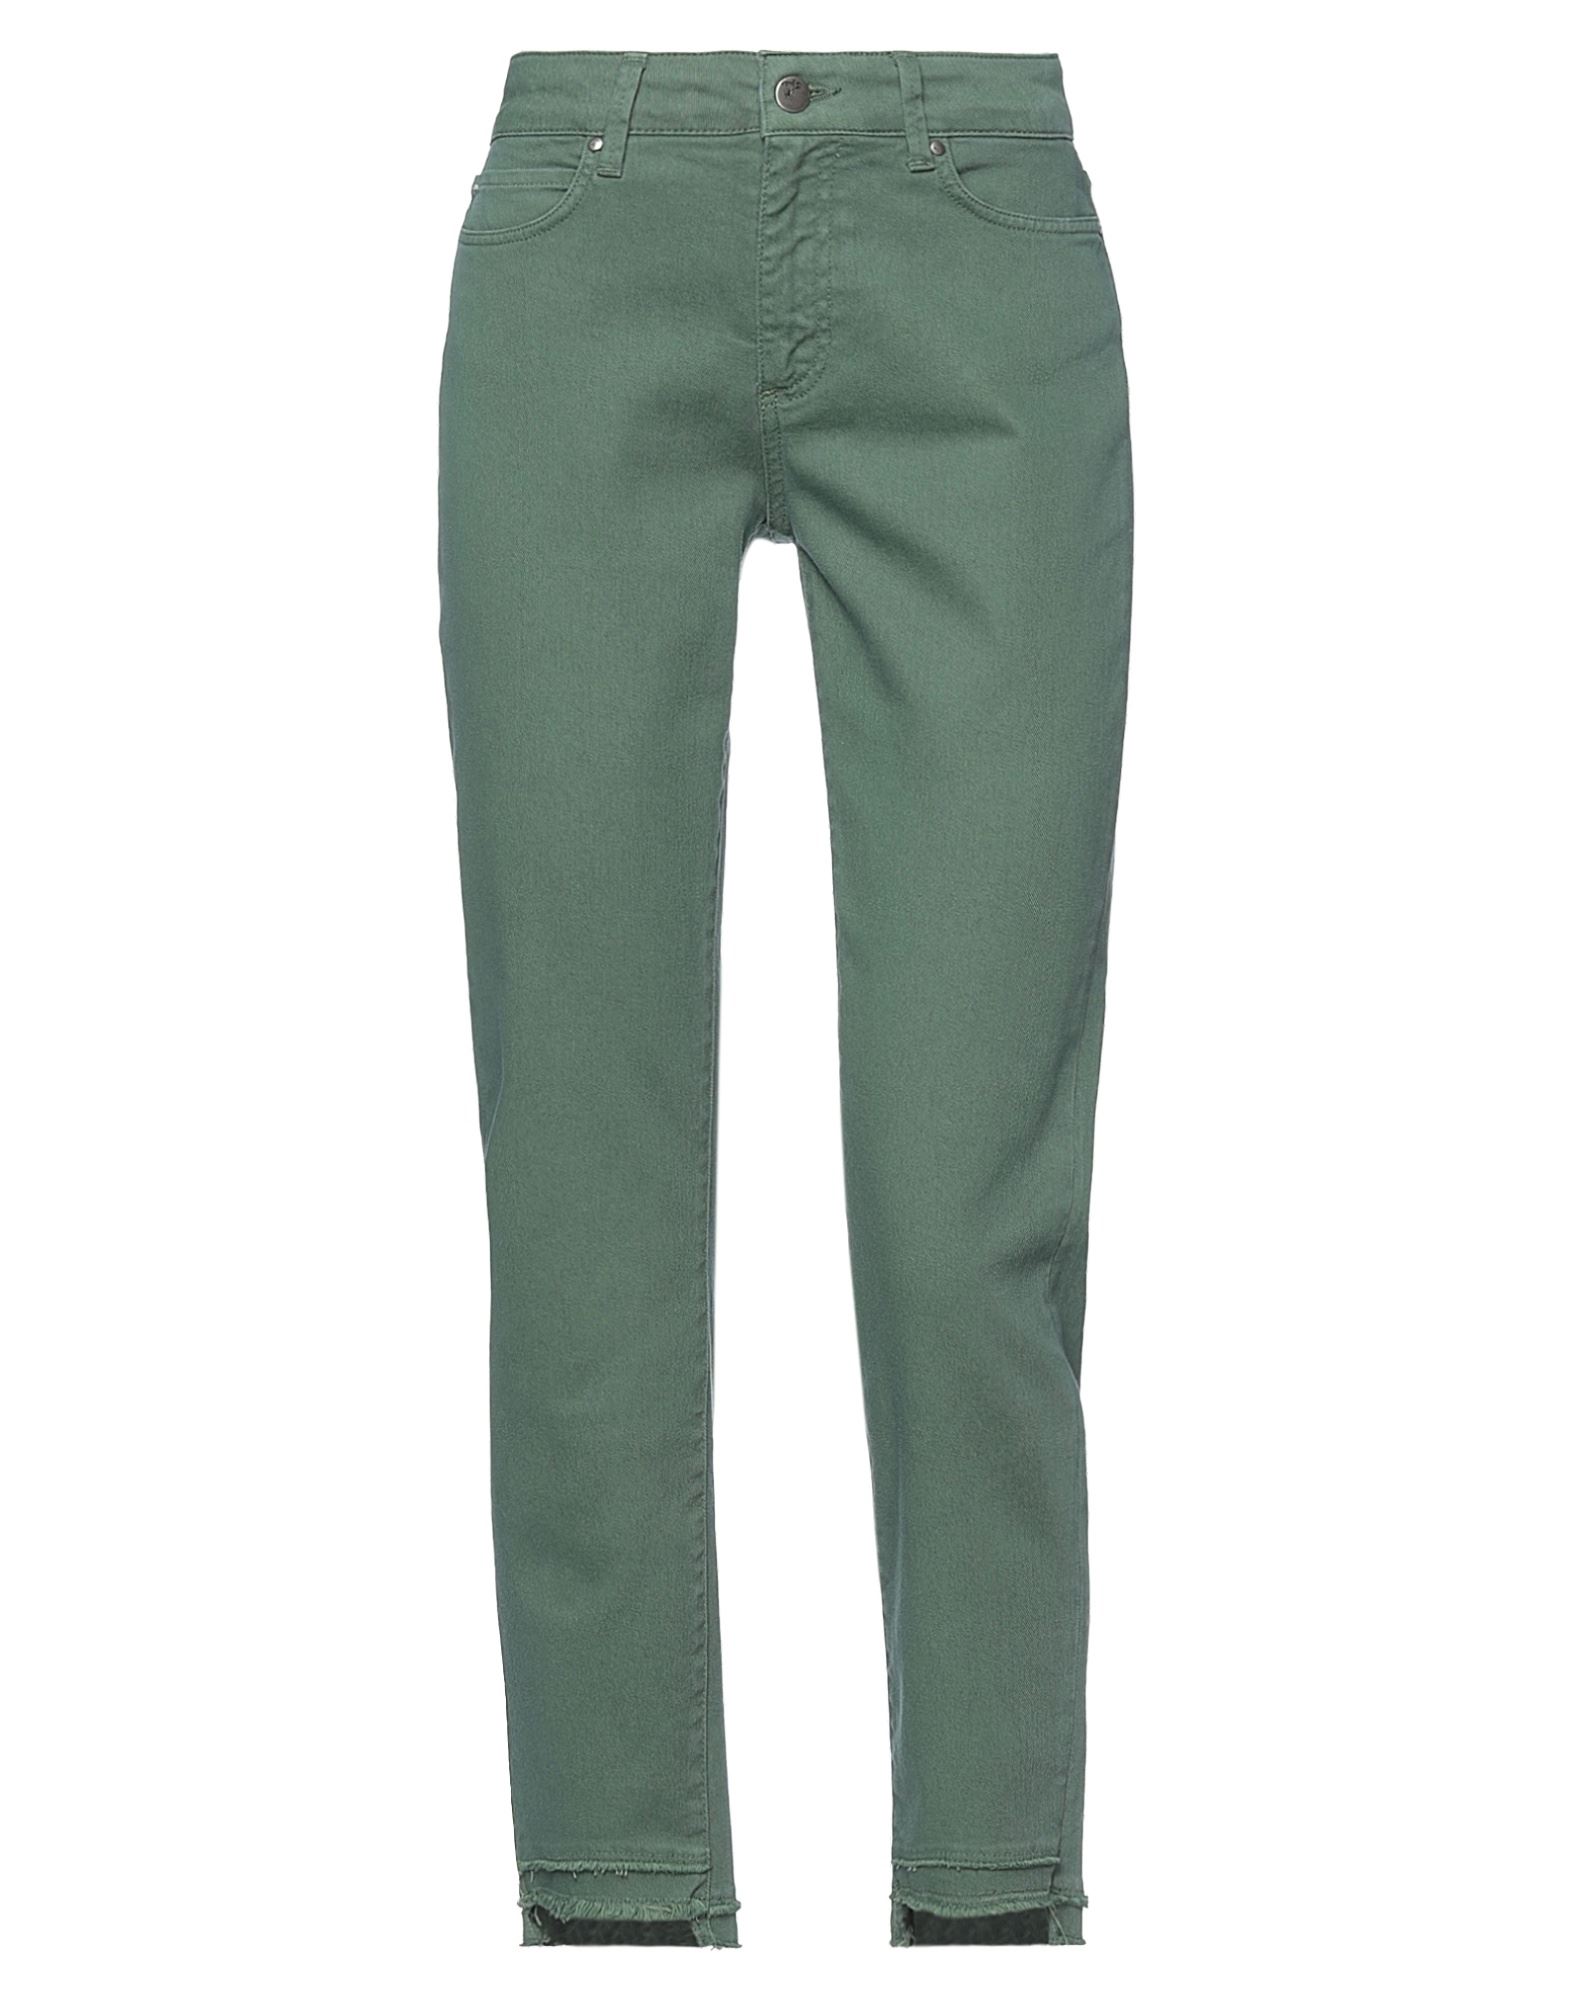 Cigala's Jeans In Green